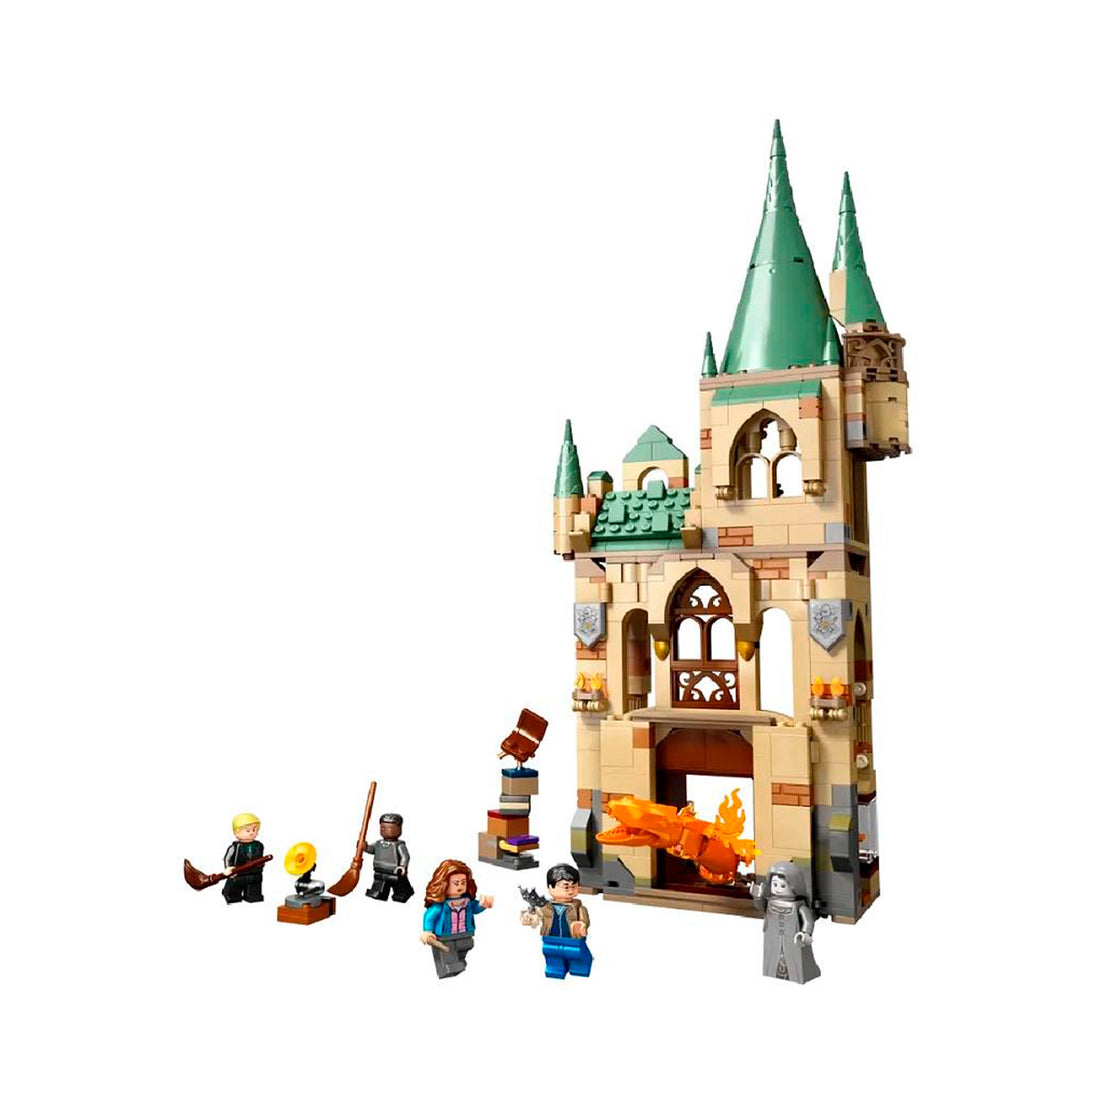 Lego Harry Potter Hogwarts: Sala Precisa